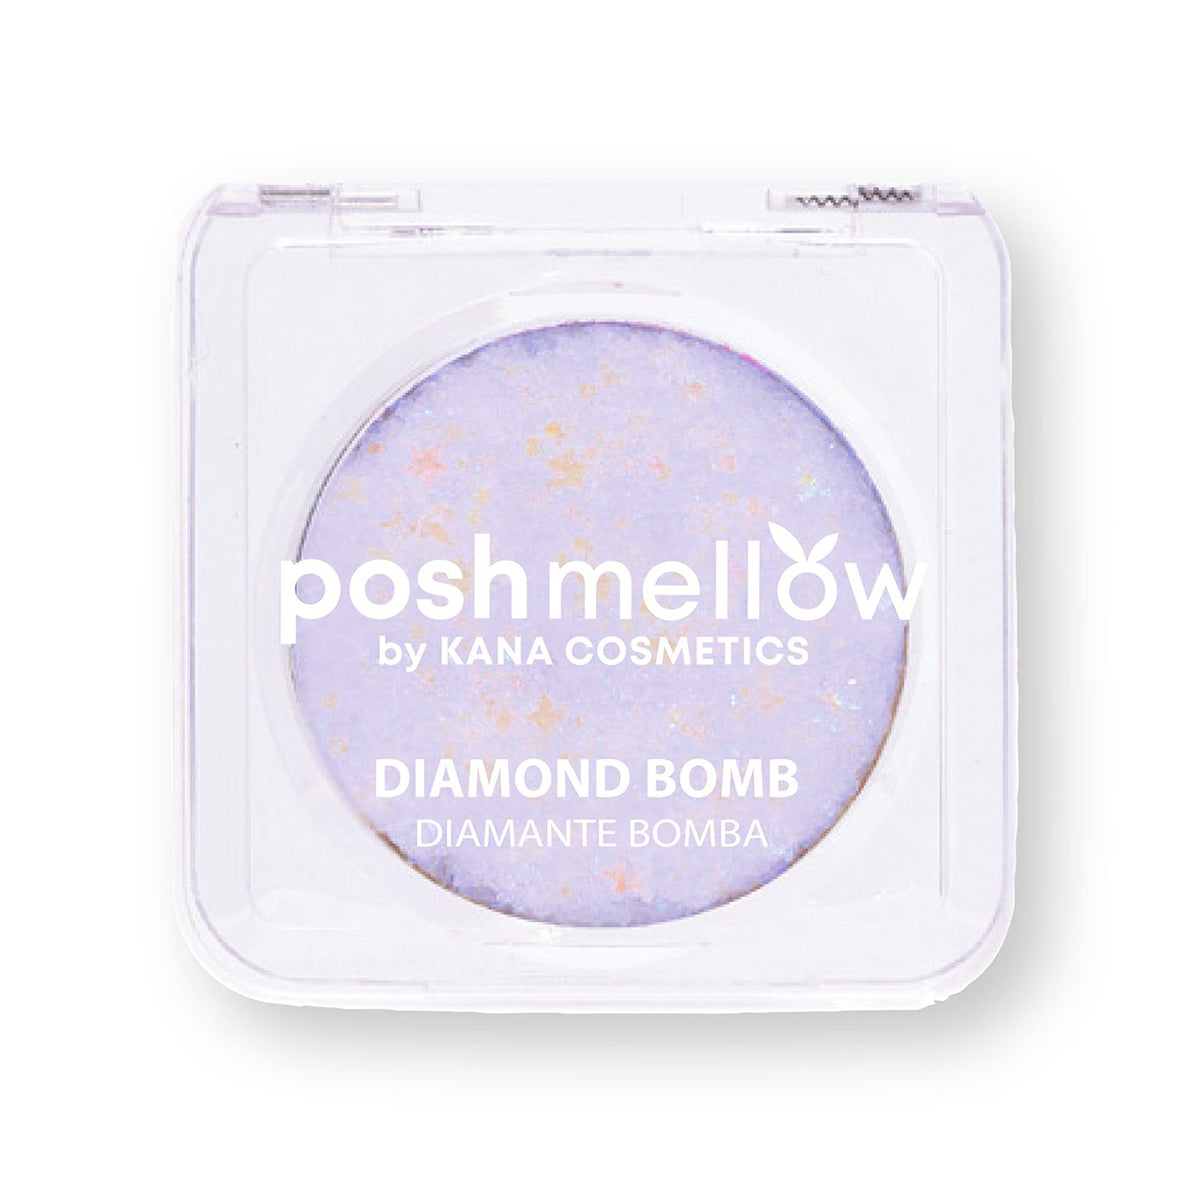 Diamond Bomb: Lavender Dream